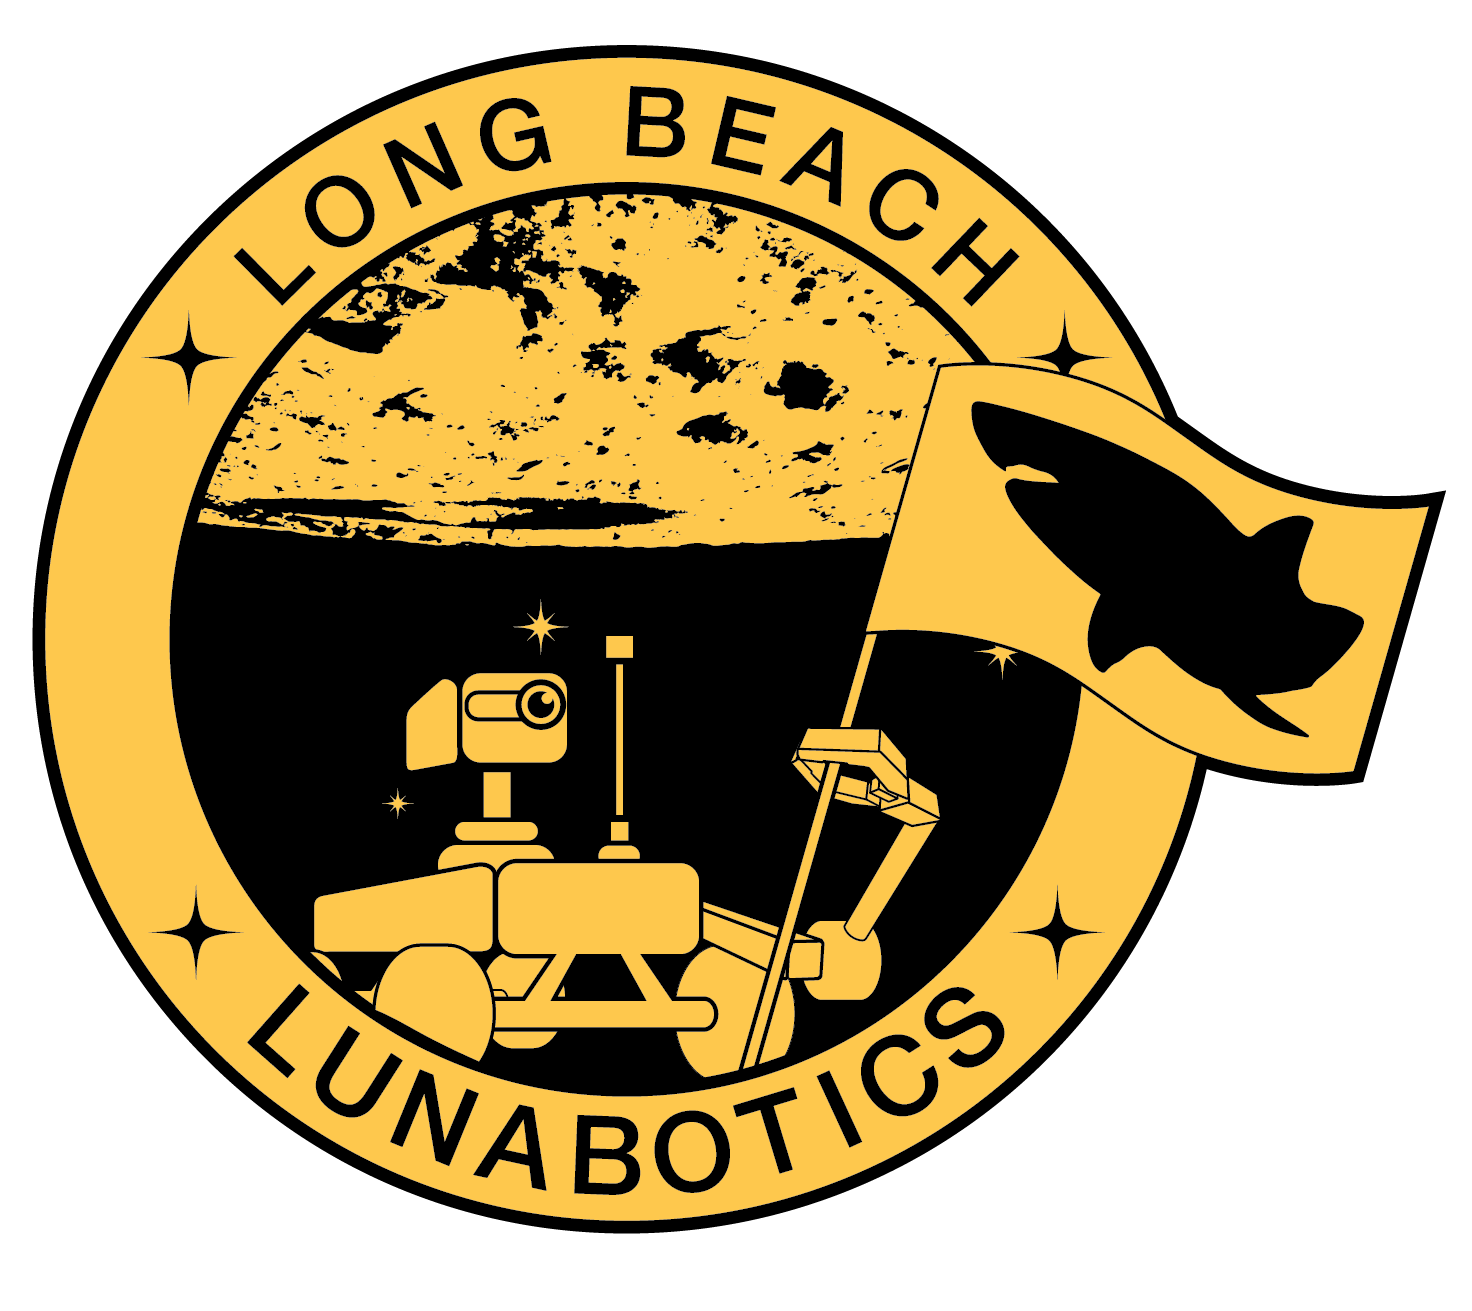 Long Beach Lunabotics